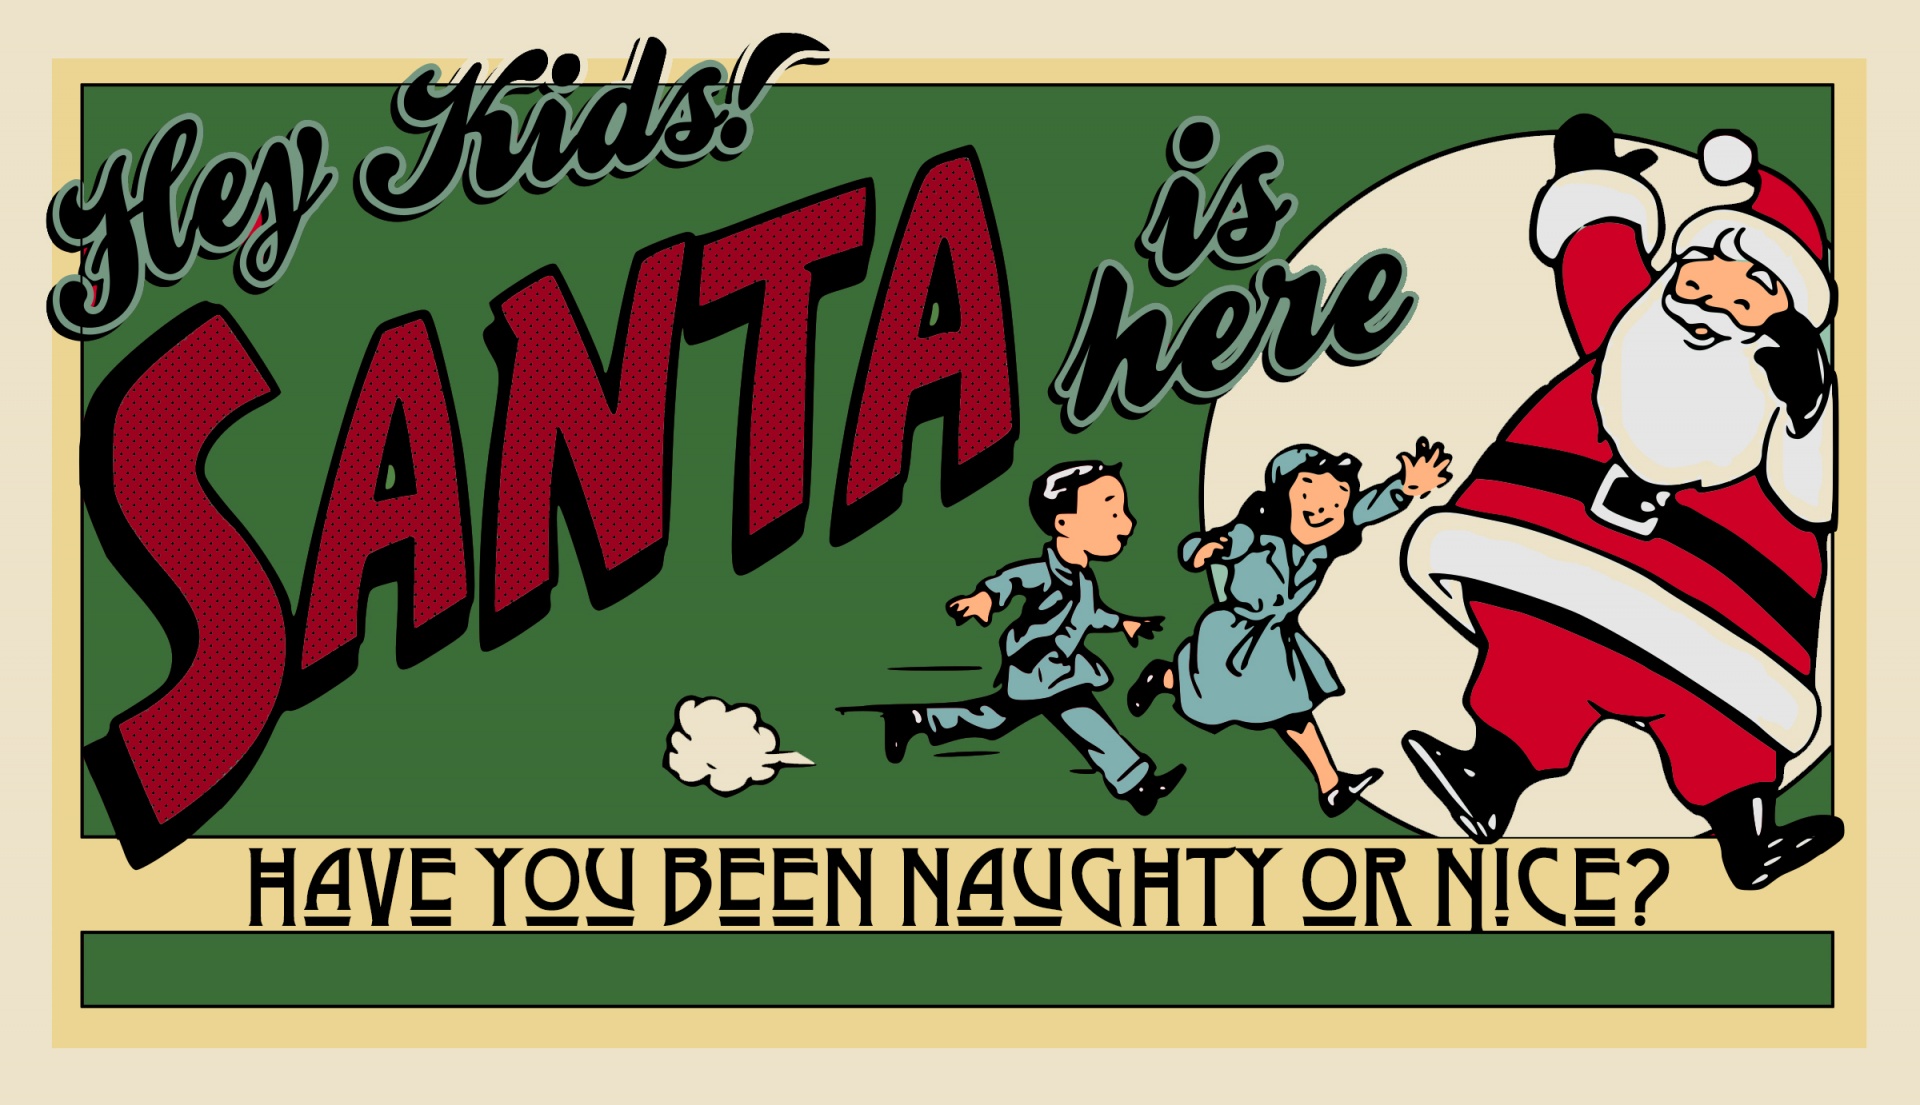 Santa Vintage Postcard